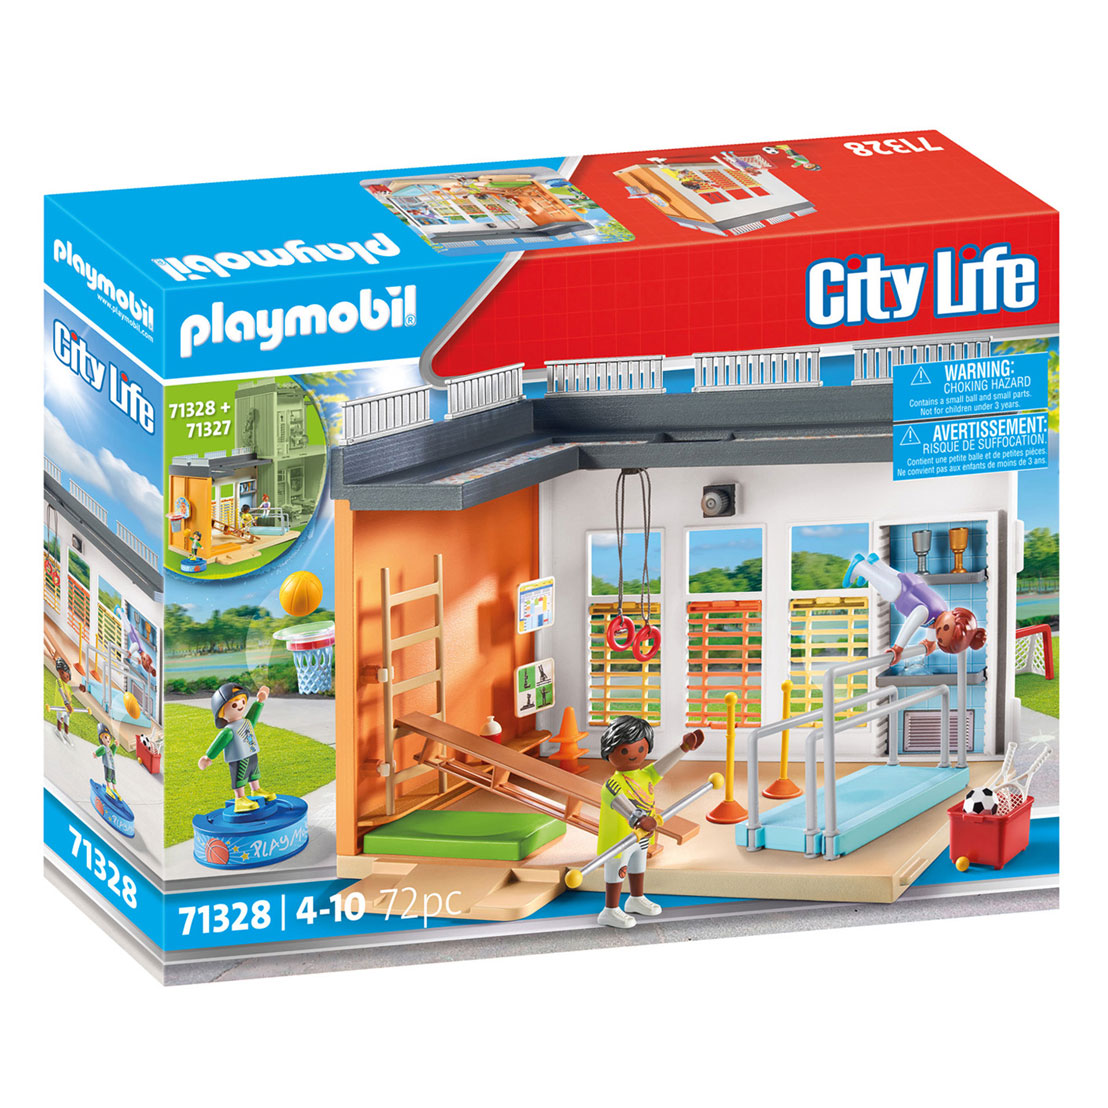 PLAYMOBIL CITY LIFE 71332 - Parcours à vélo Playmobil